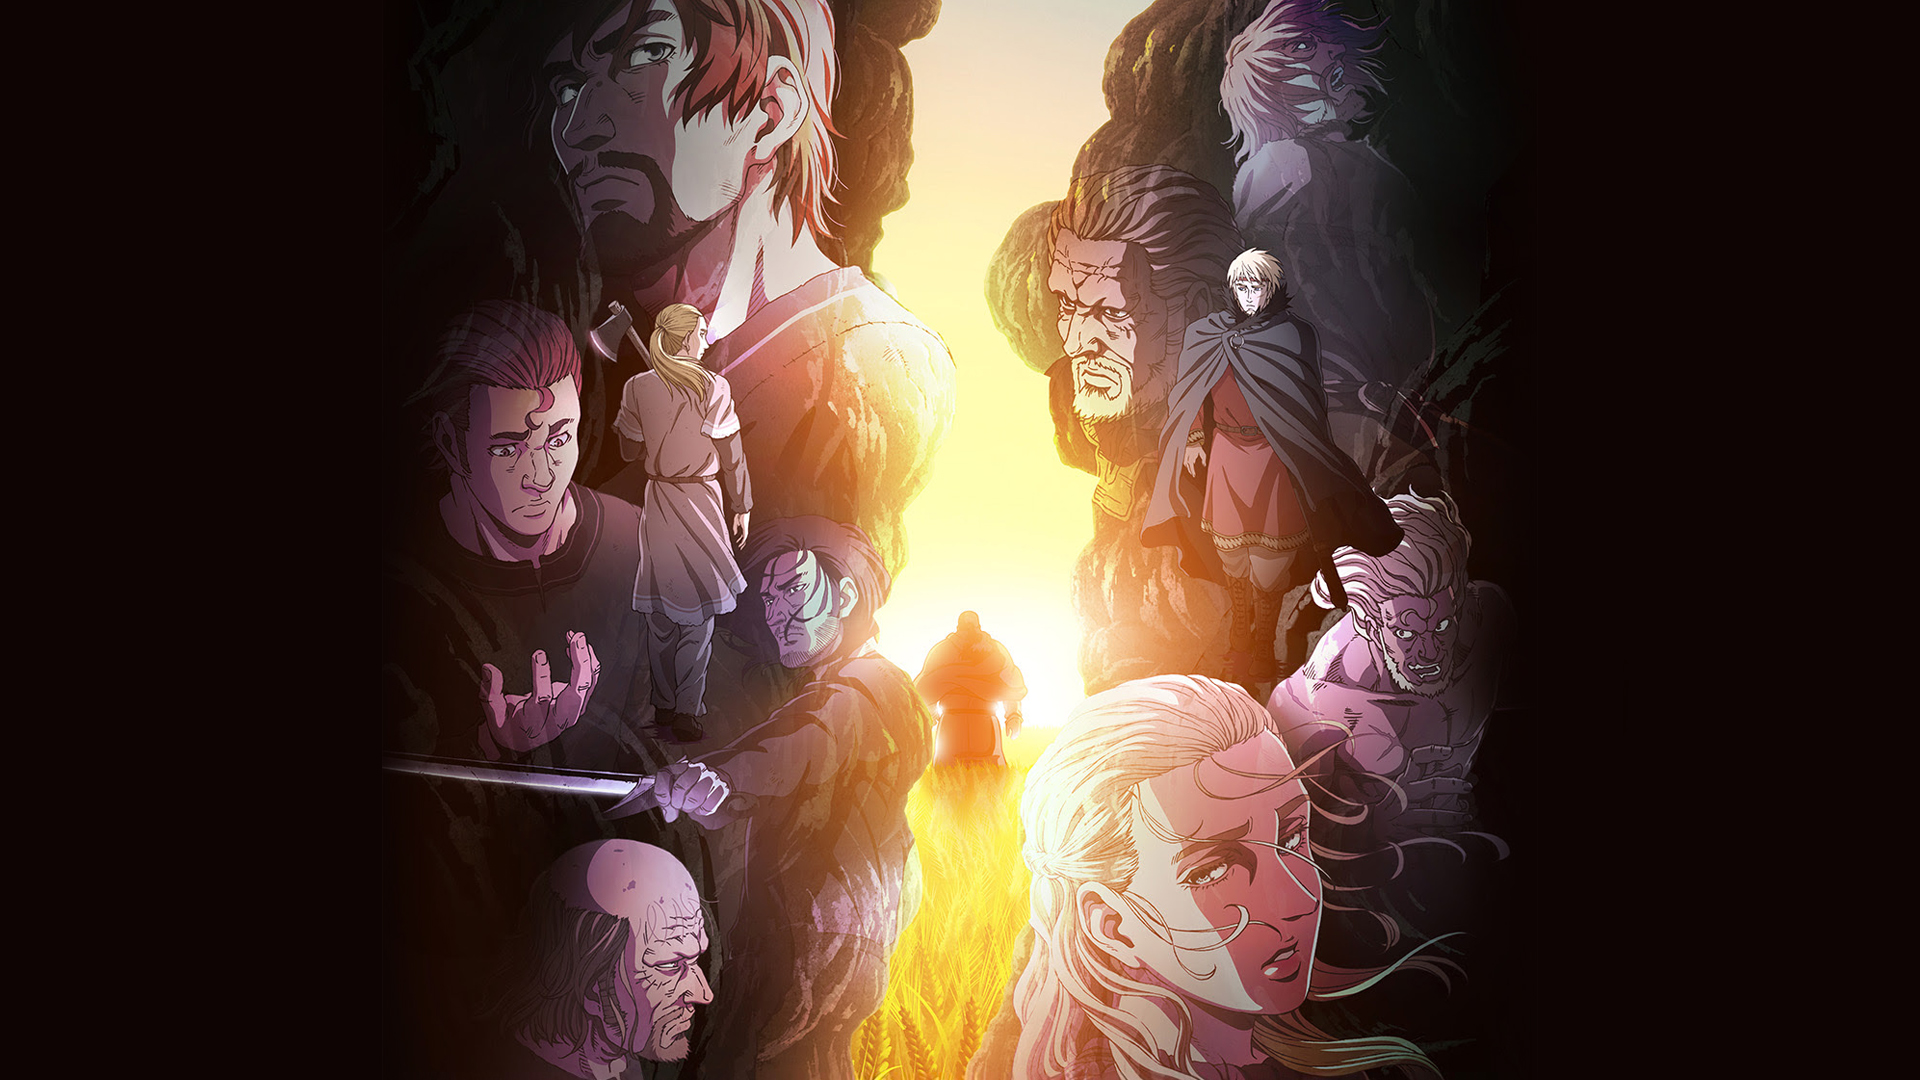 Vinland Saga  Anime com temática Viking - Multiversos